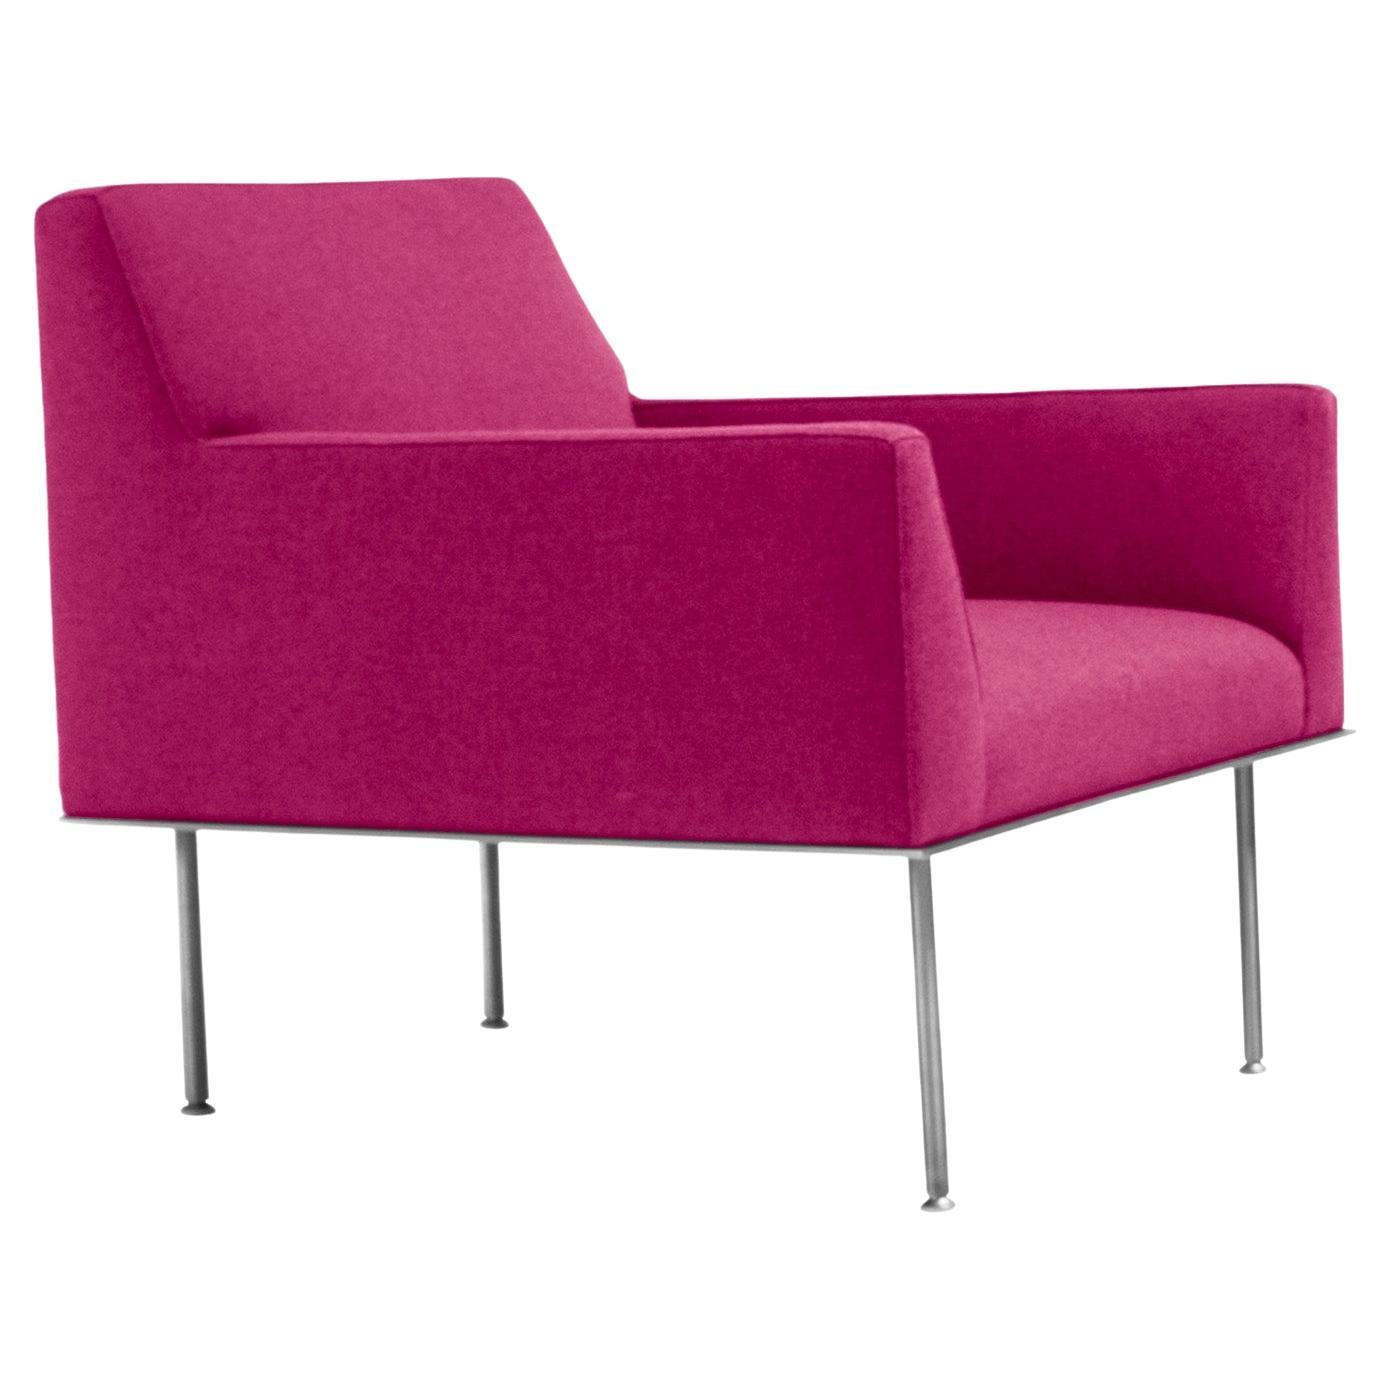 Vioski New Century Modern Angeles Lounge Chair in Fuchsia For Sale